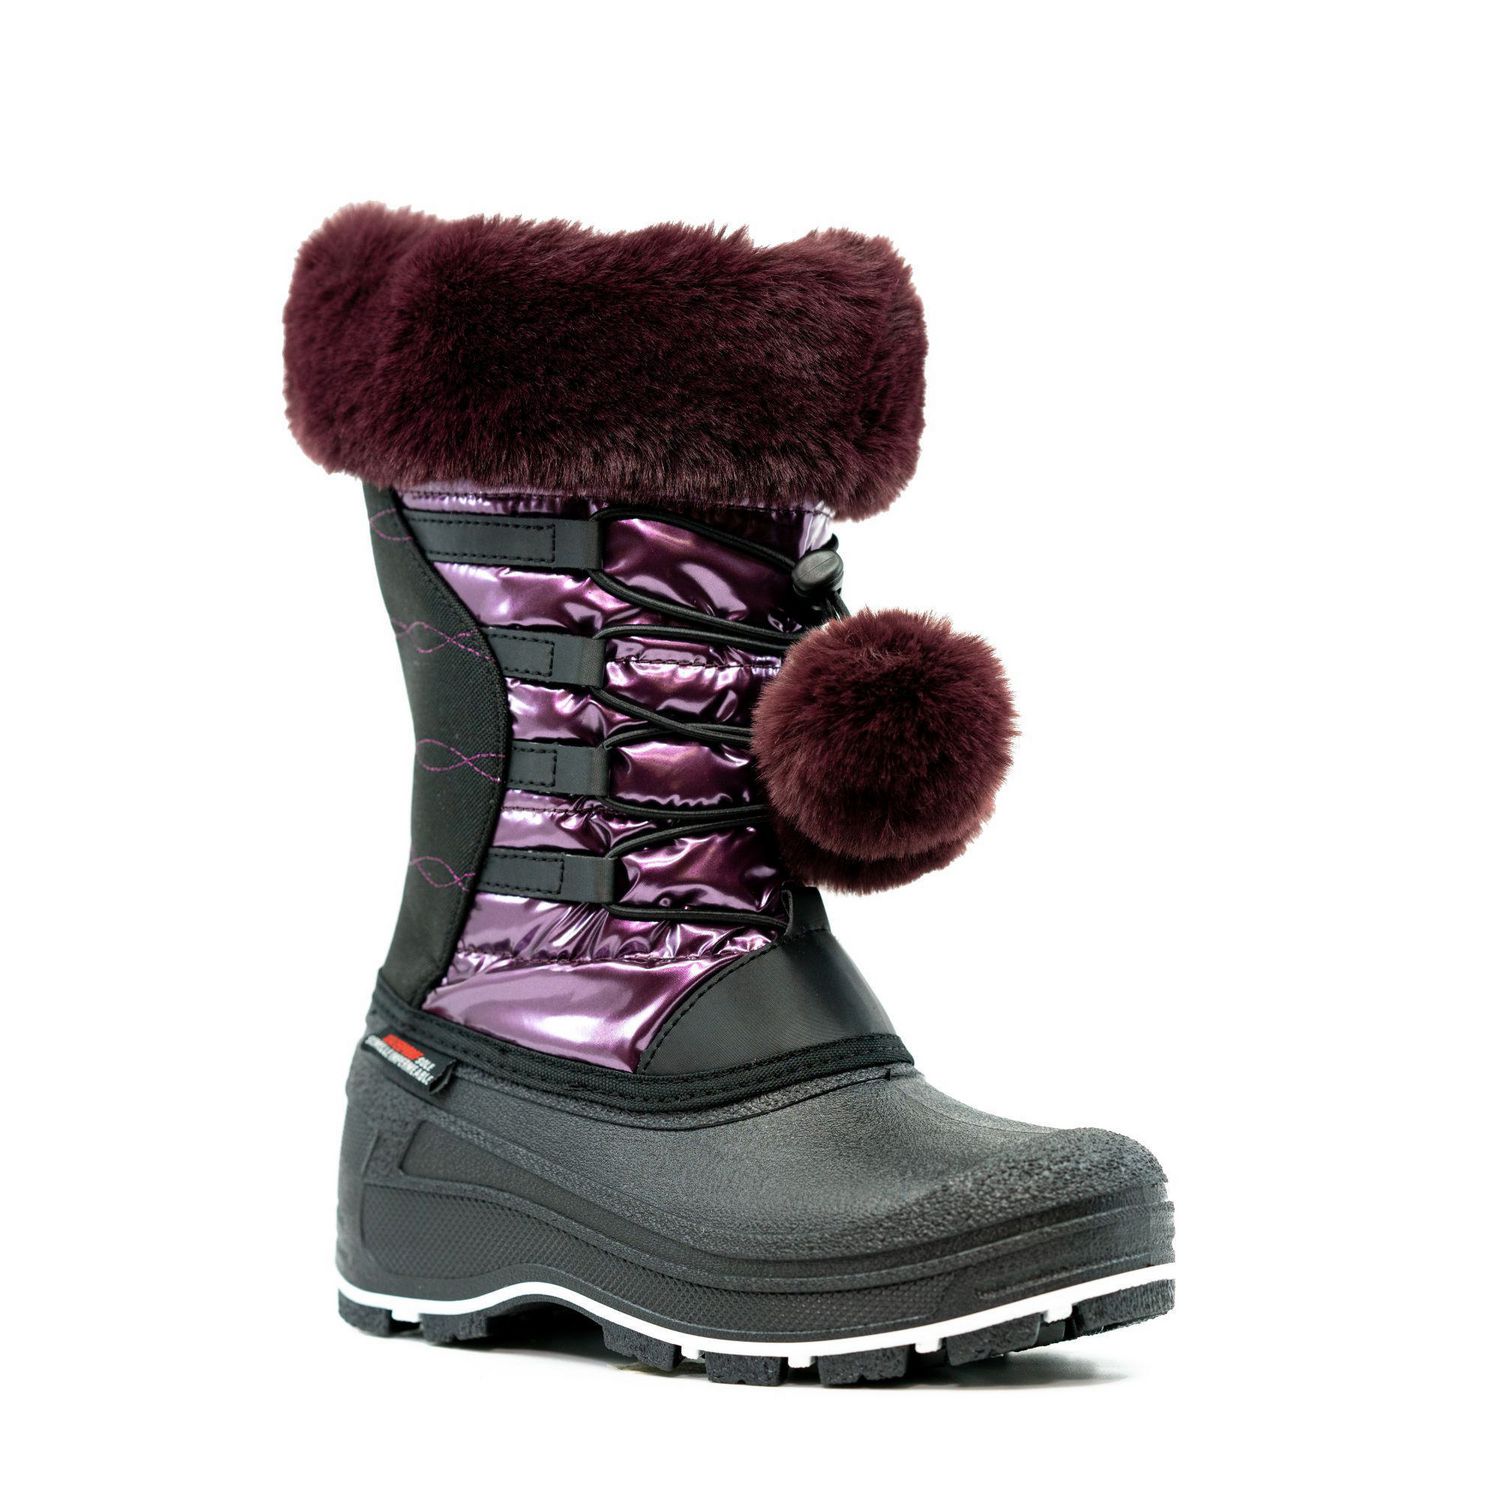 Girls Snow Boots Winter Purple/Black 